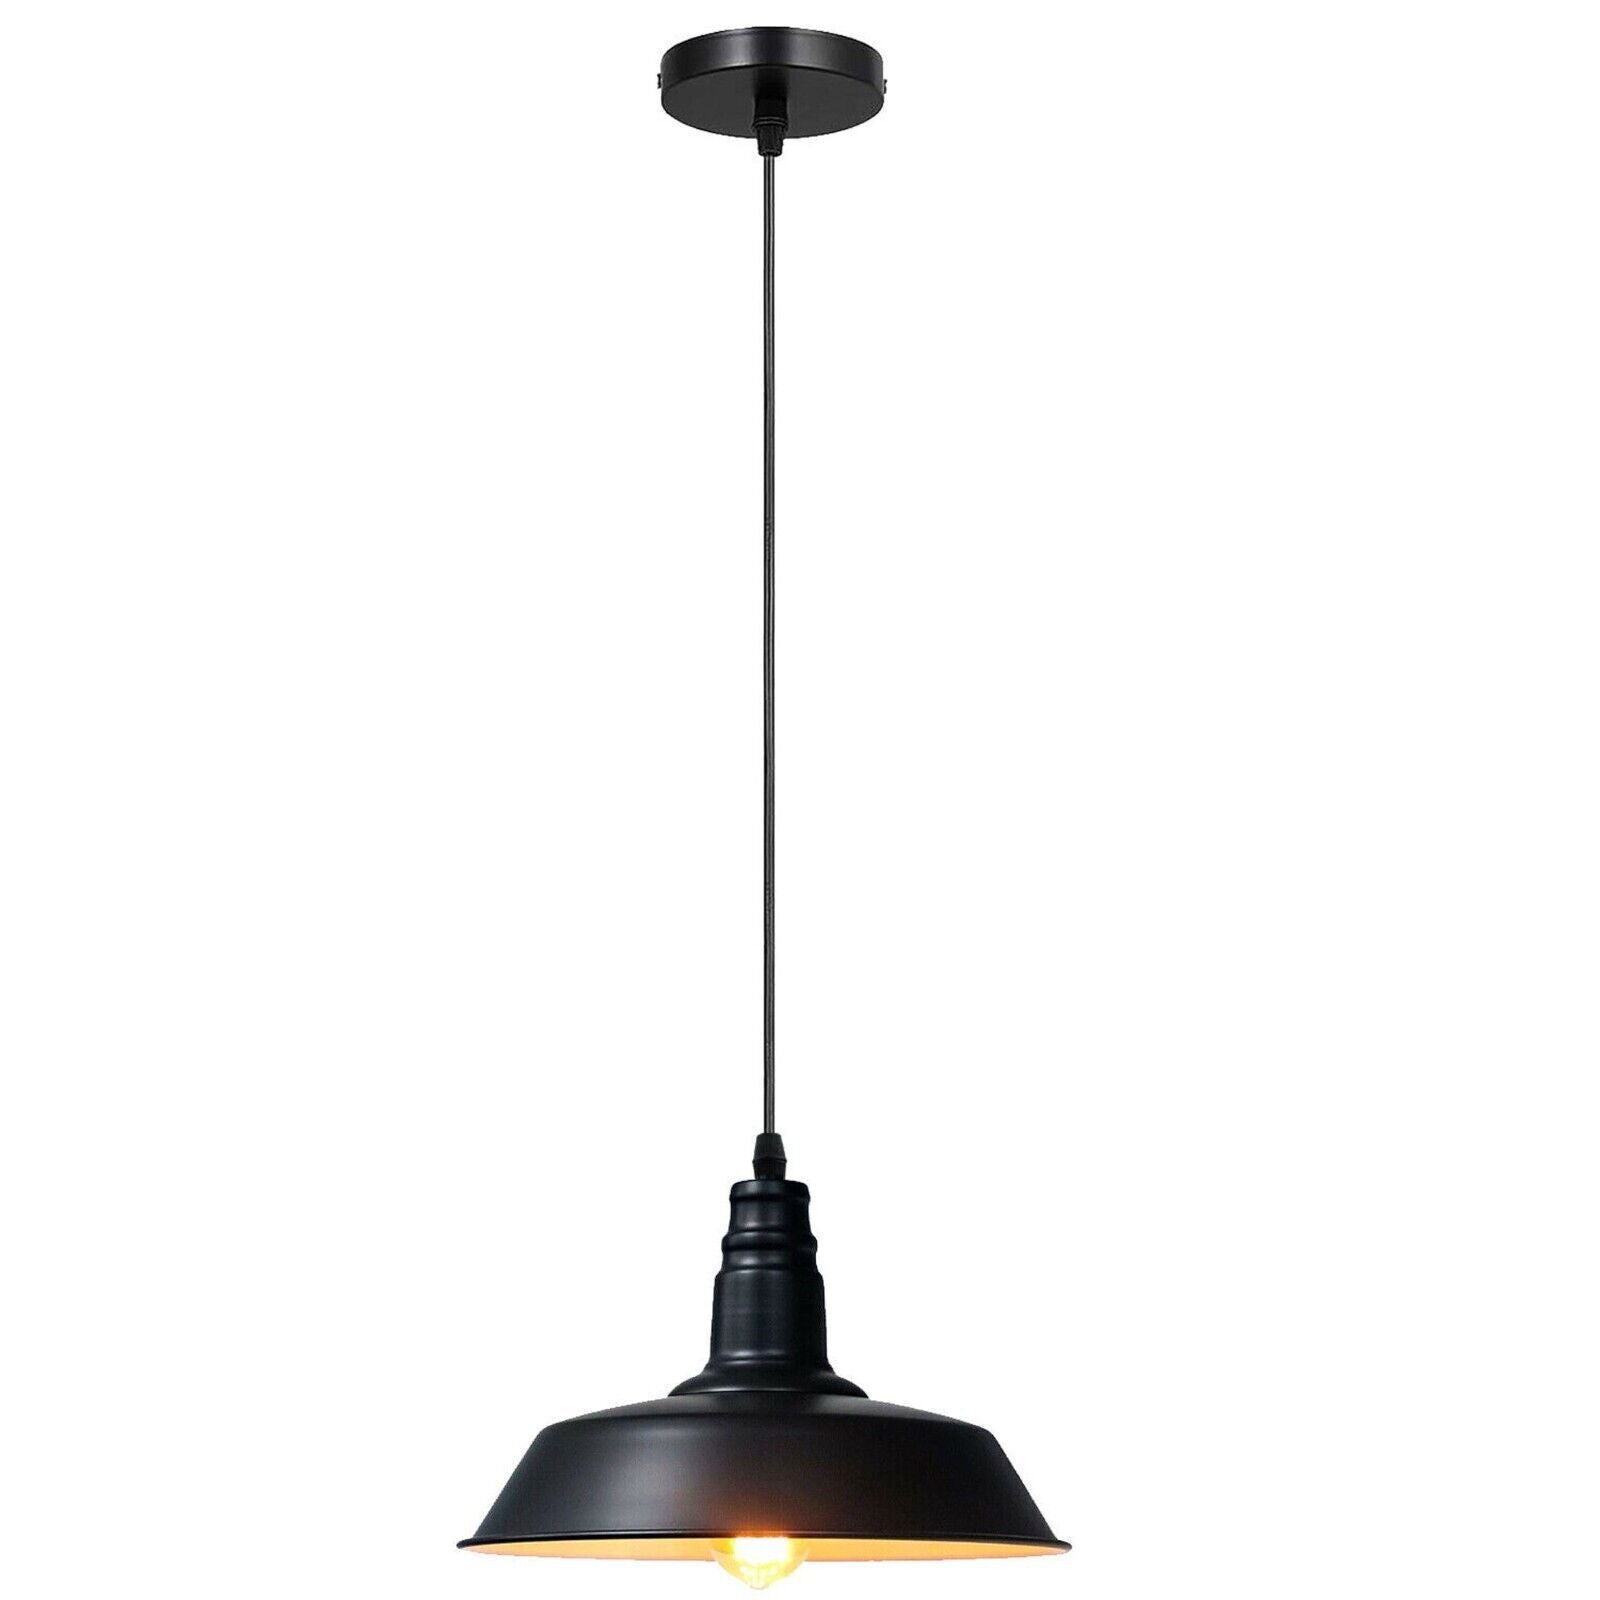 pendant Ceiling hanging Lamp, Metal Light Shade Lighting UK E27 Edison base Decorate Height Adjustable Pendant Light for Bar, Restaurant , Home and Kitchen